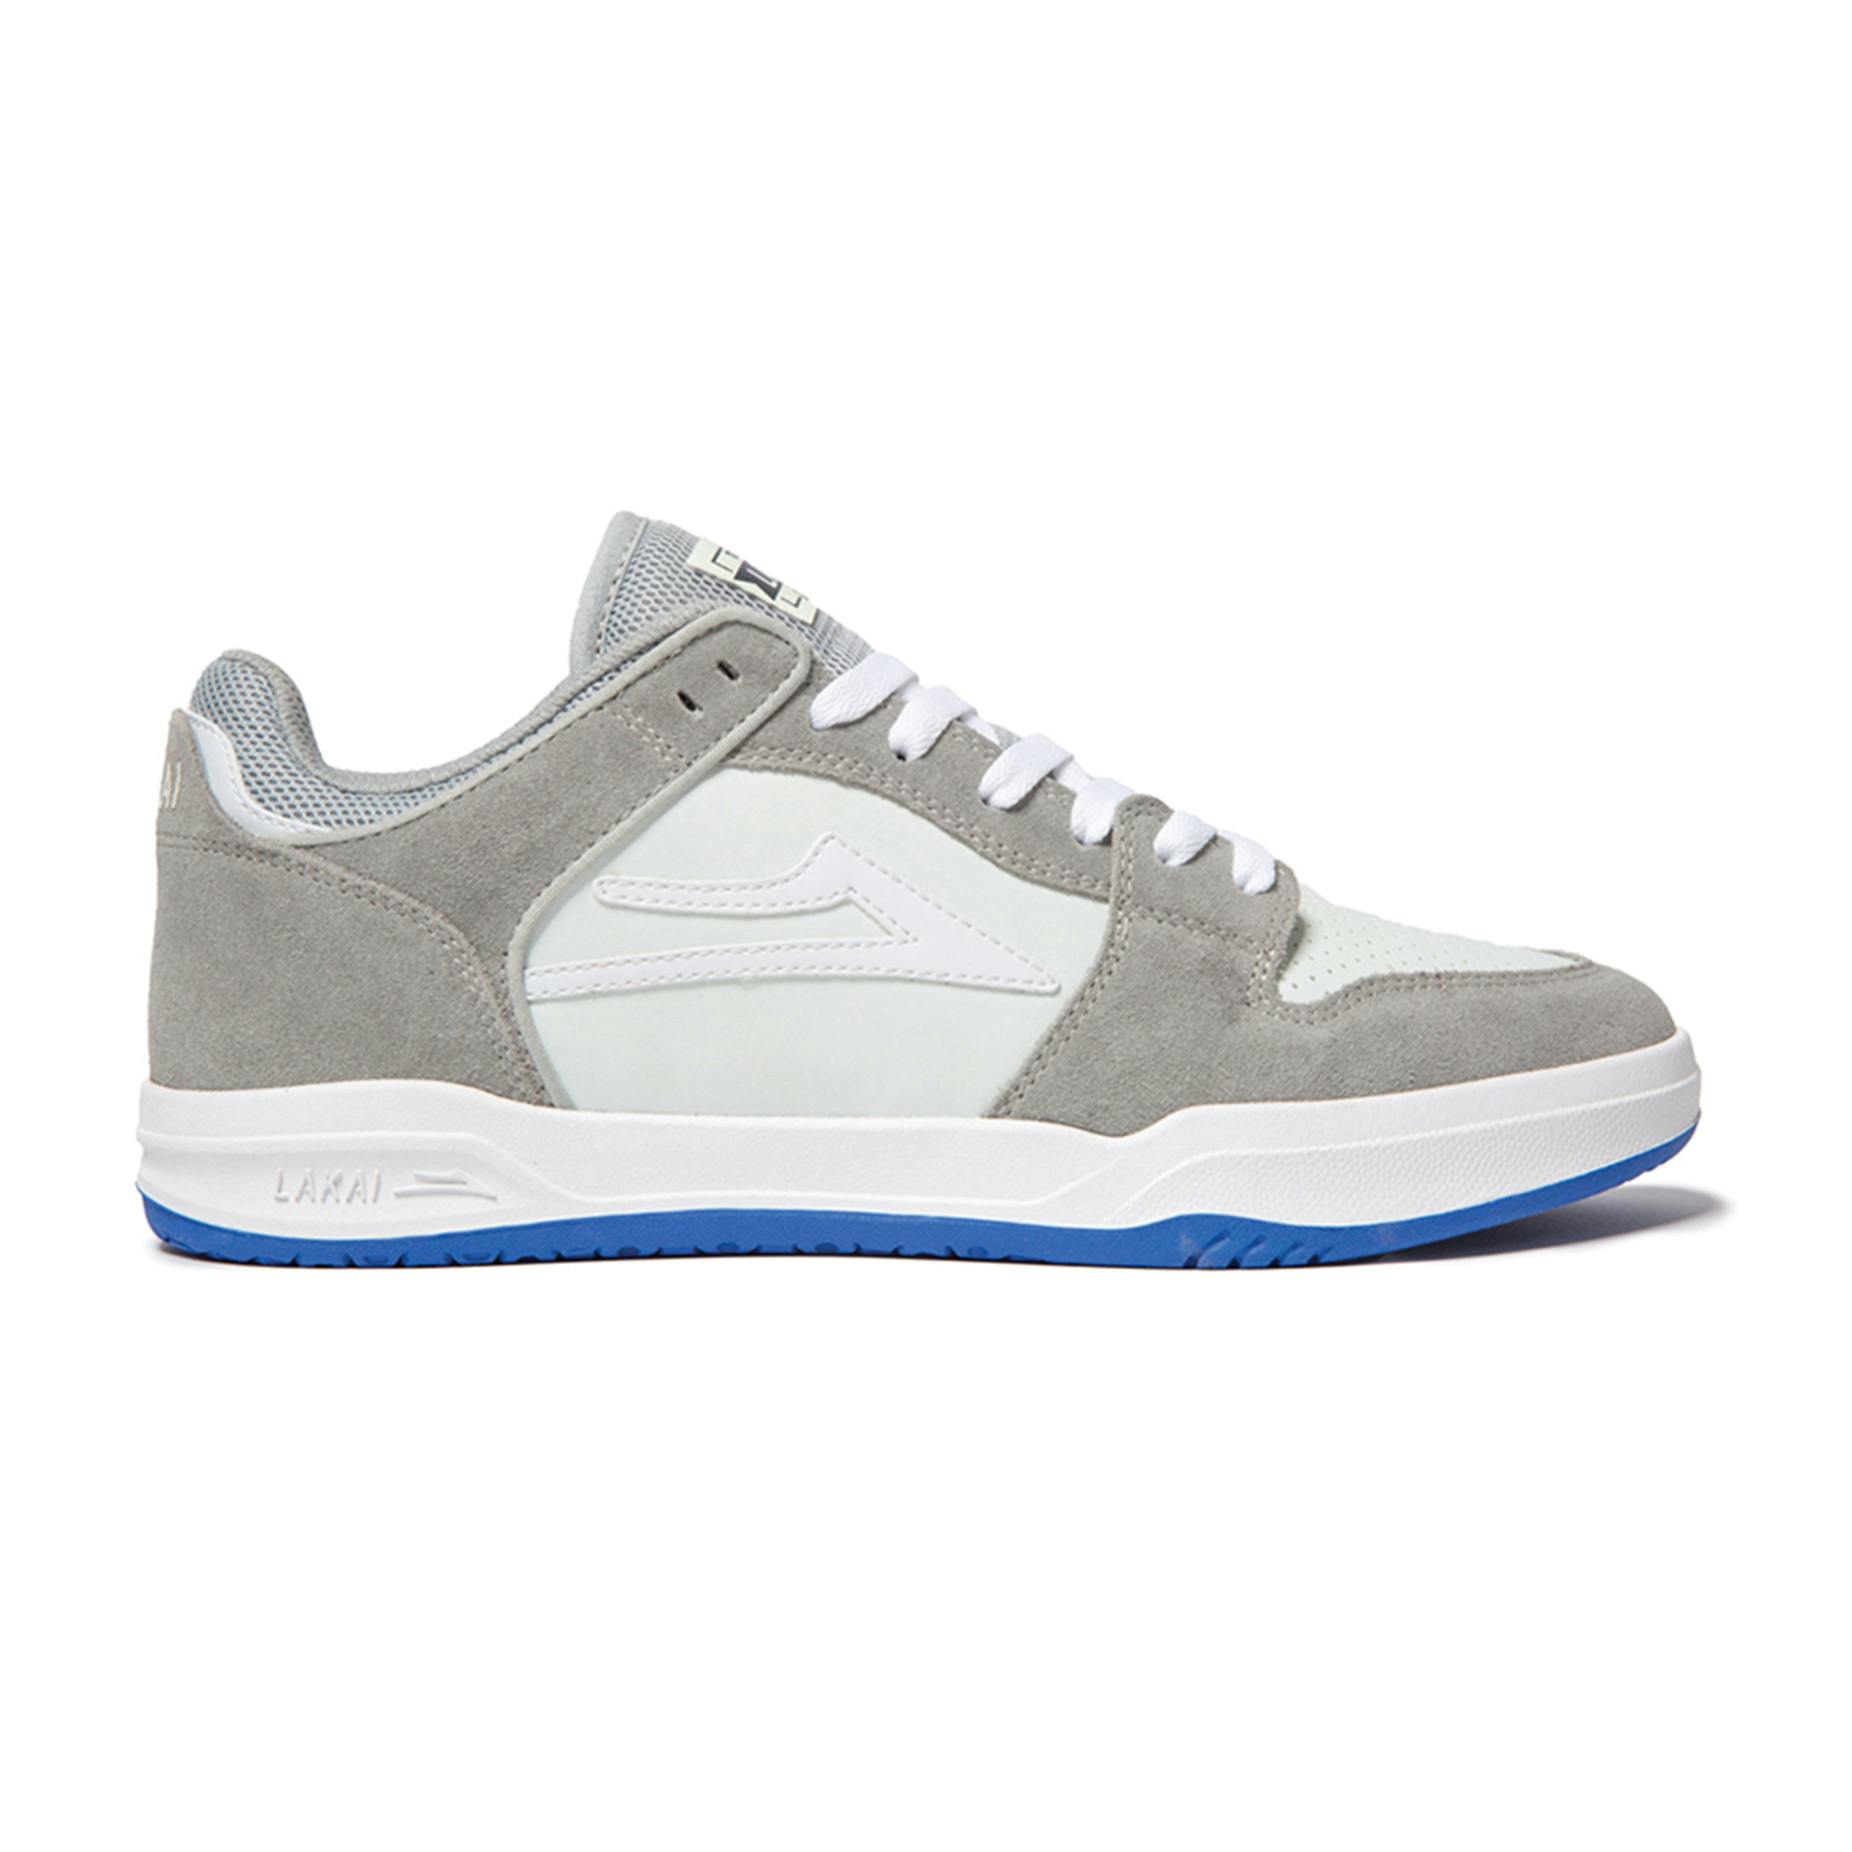 Lakai Telford Low Skate Shoe - Grey/Blue UV Suede | BOARDWORLD Store